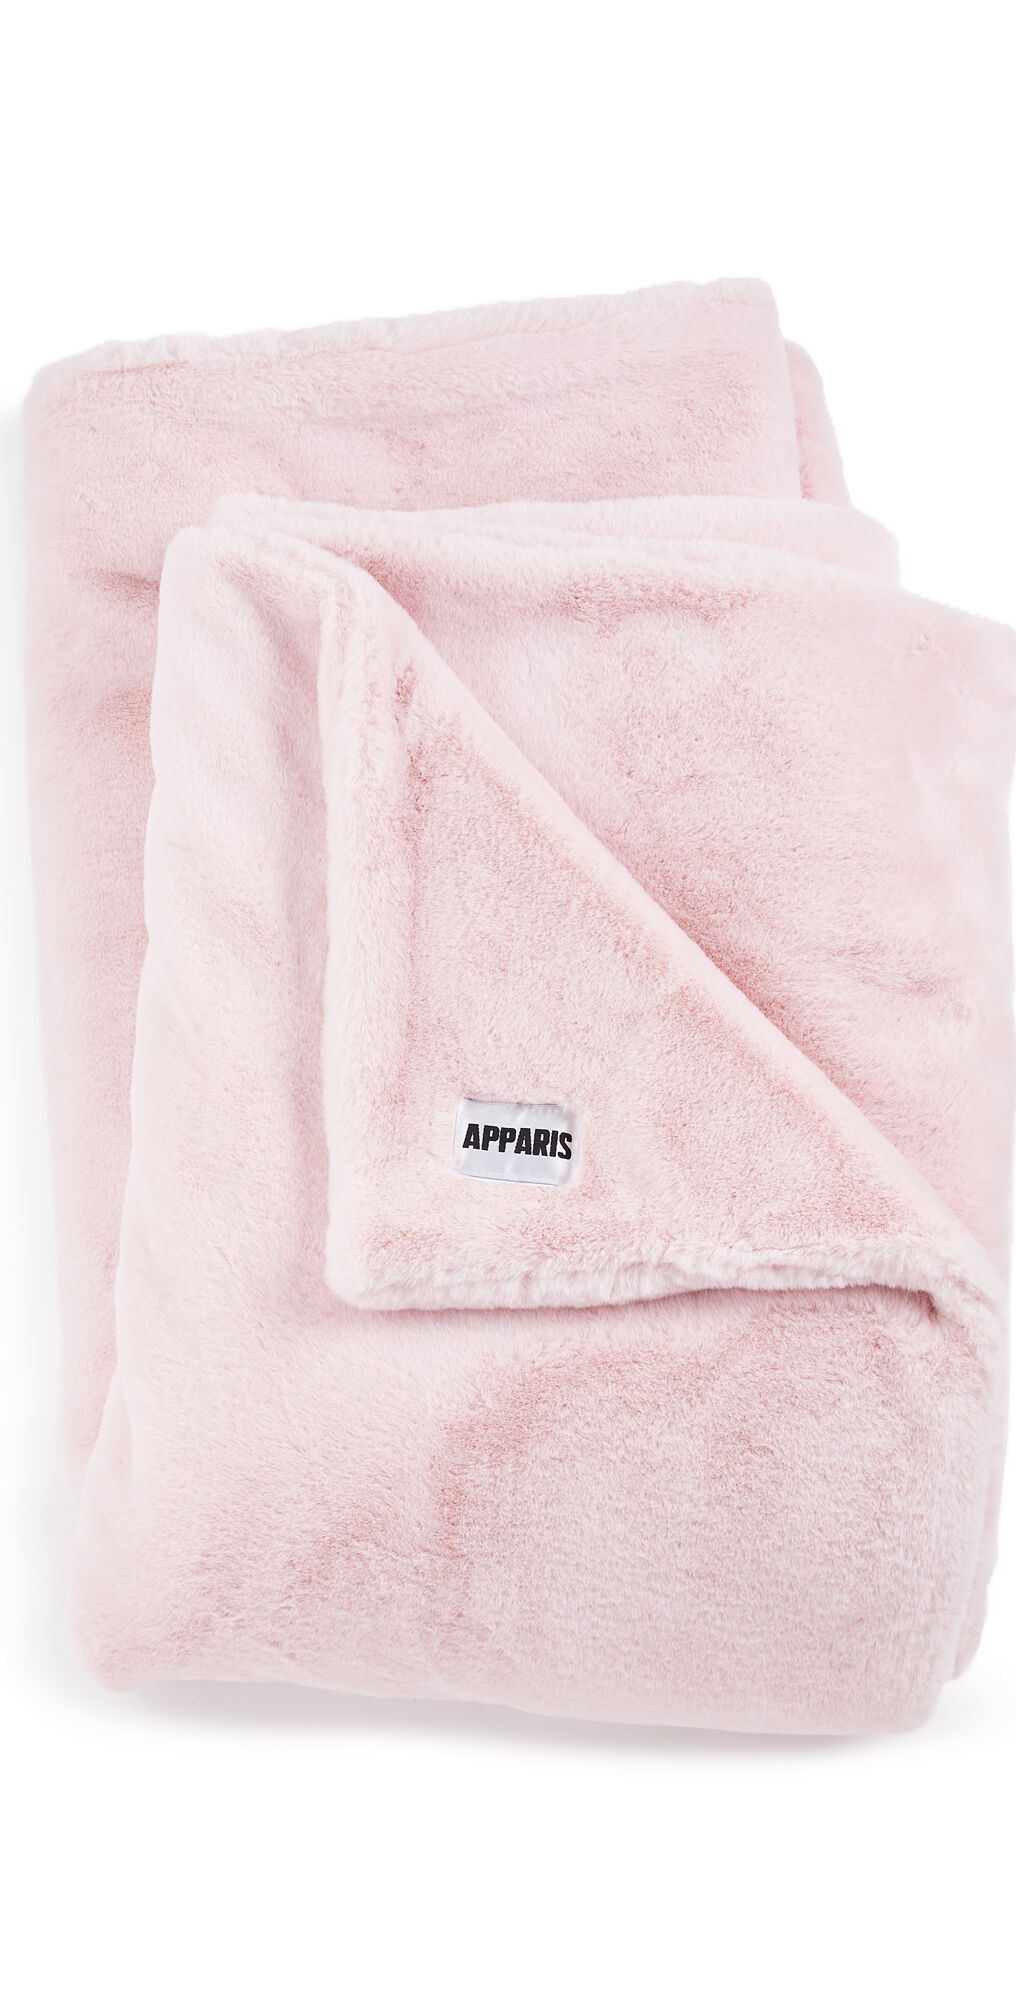 Apparis Brady Blanket Blush One Size  Blush  size:One Size